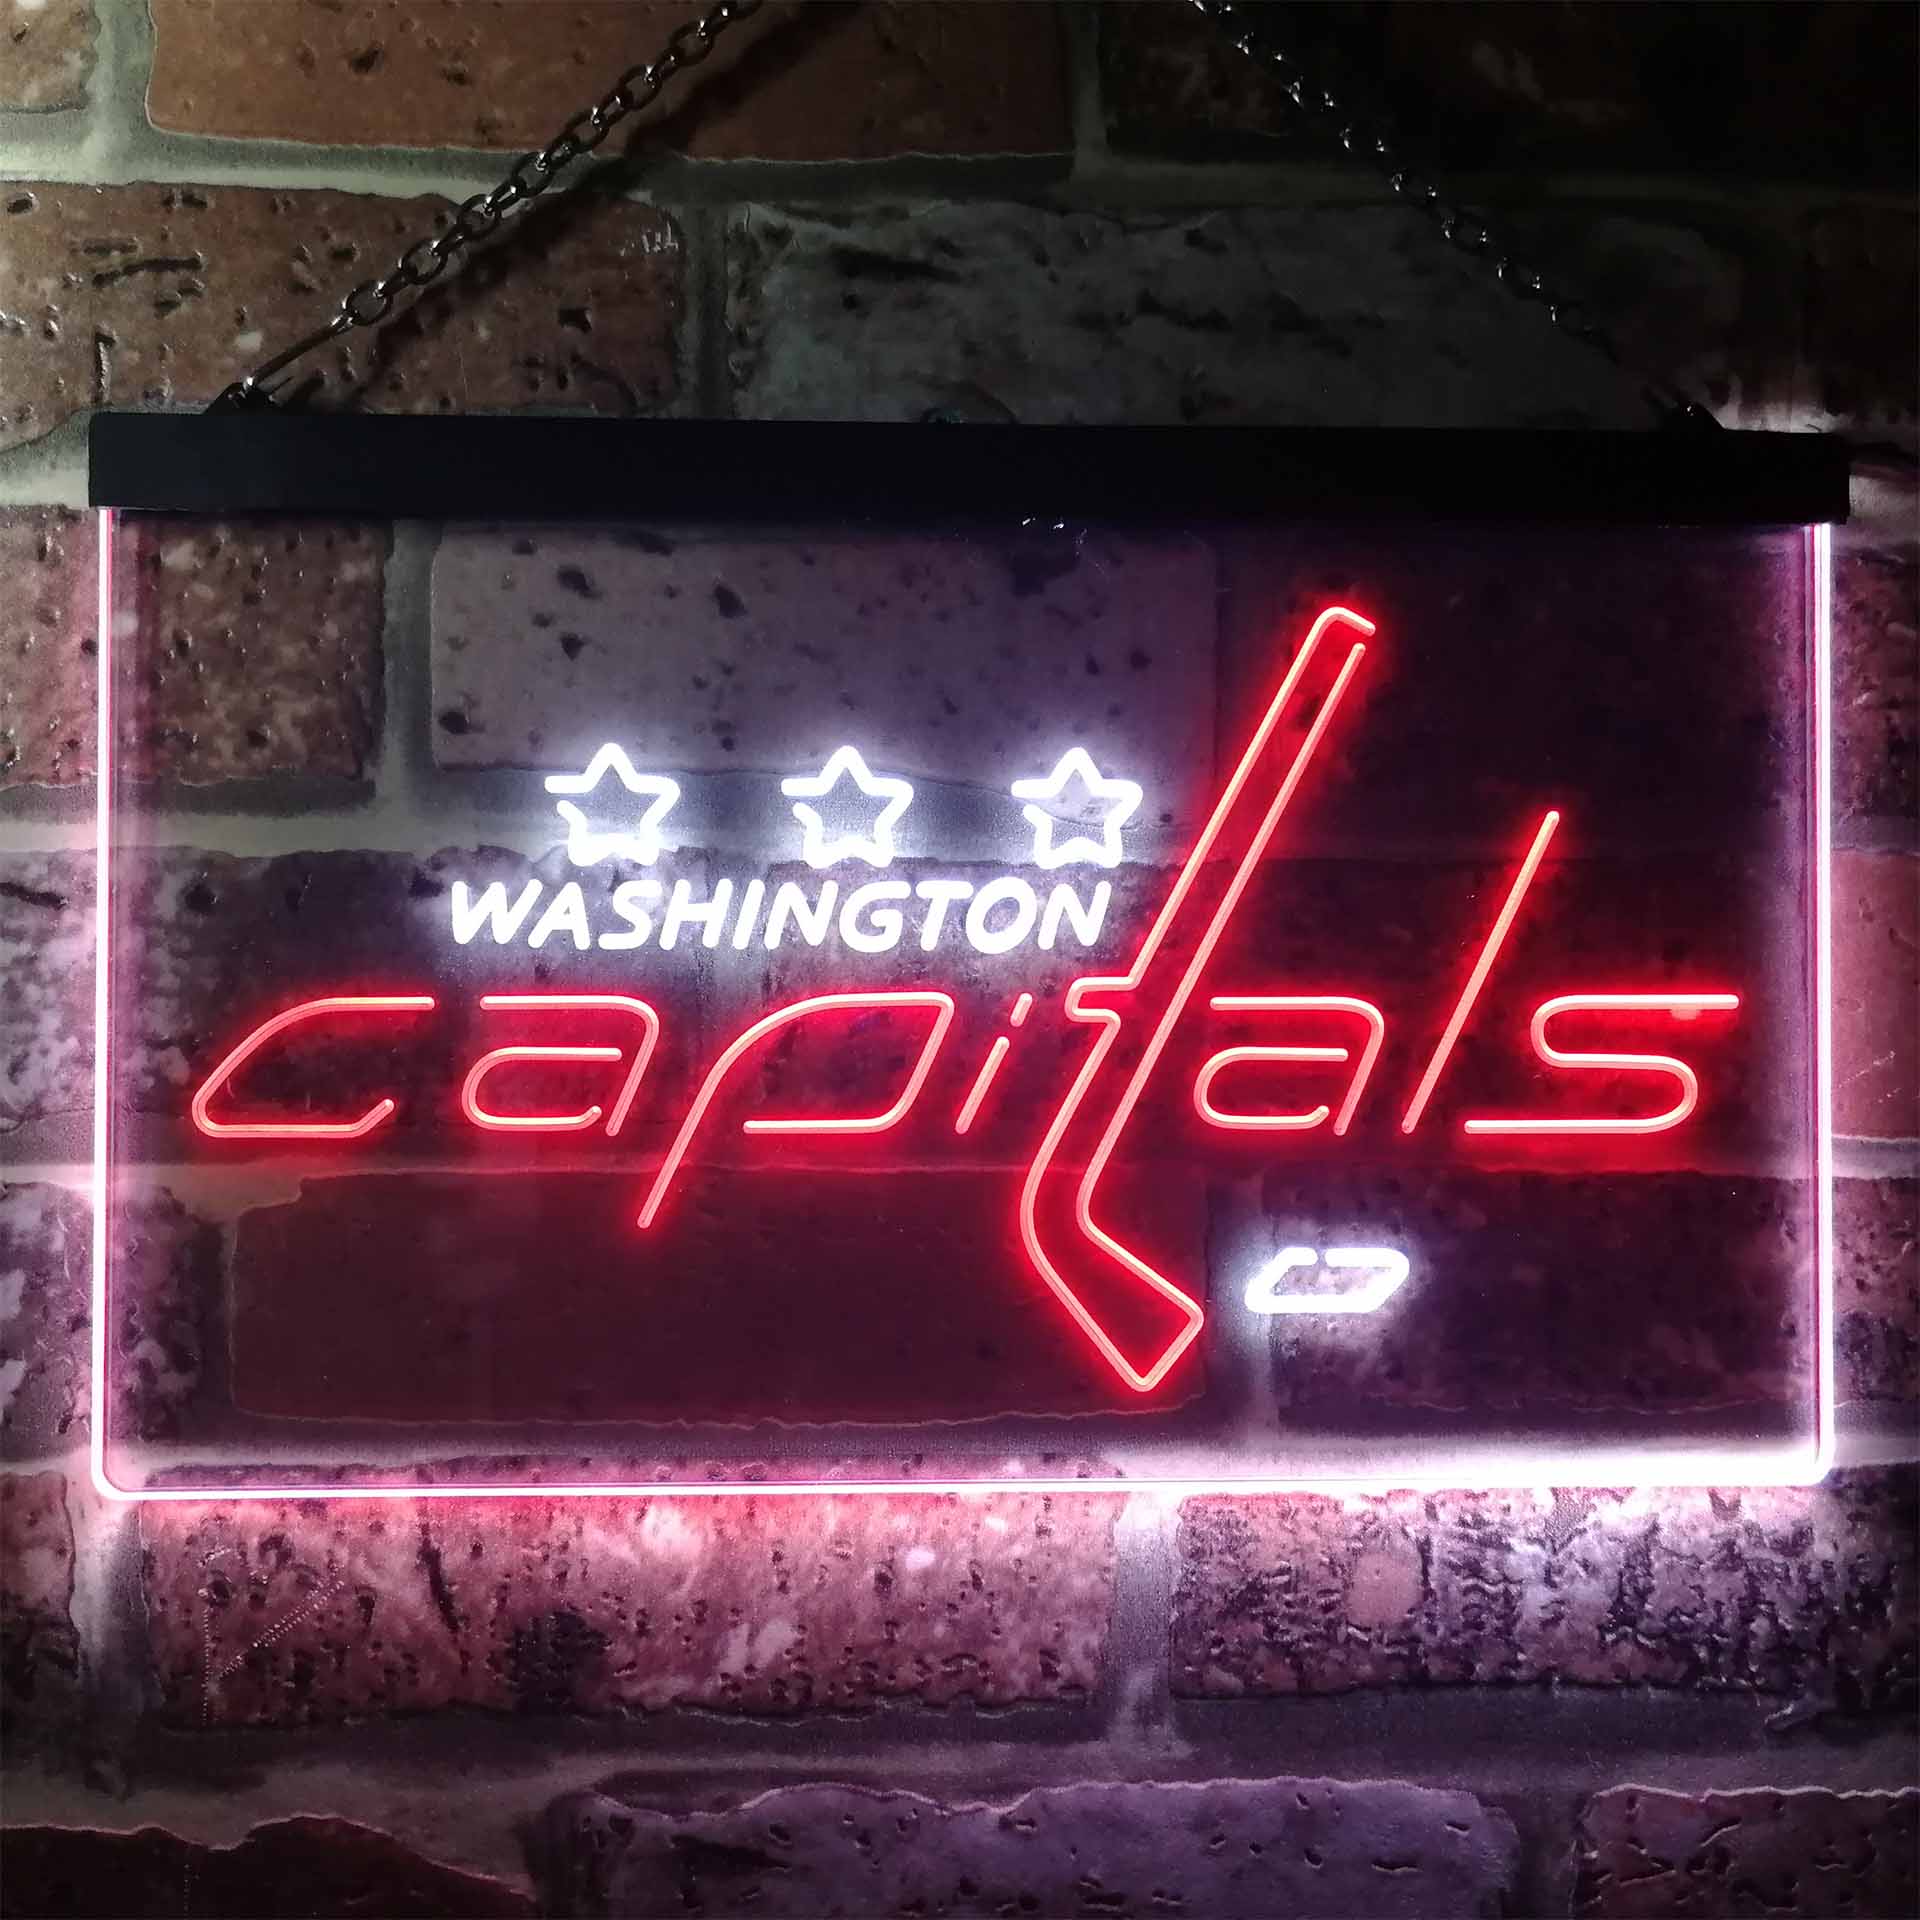 Washingtons Capitals LED Neon Sign